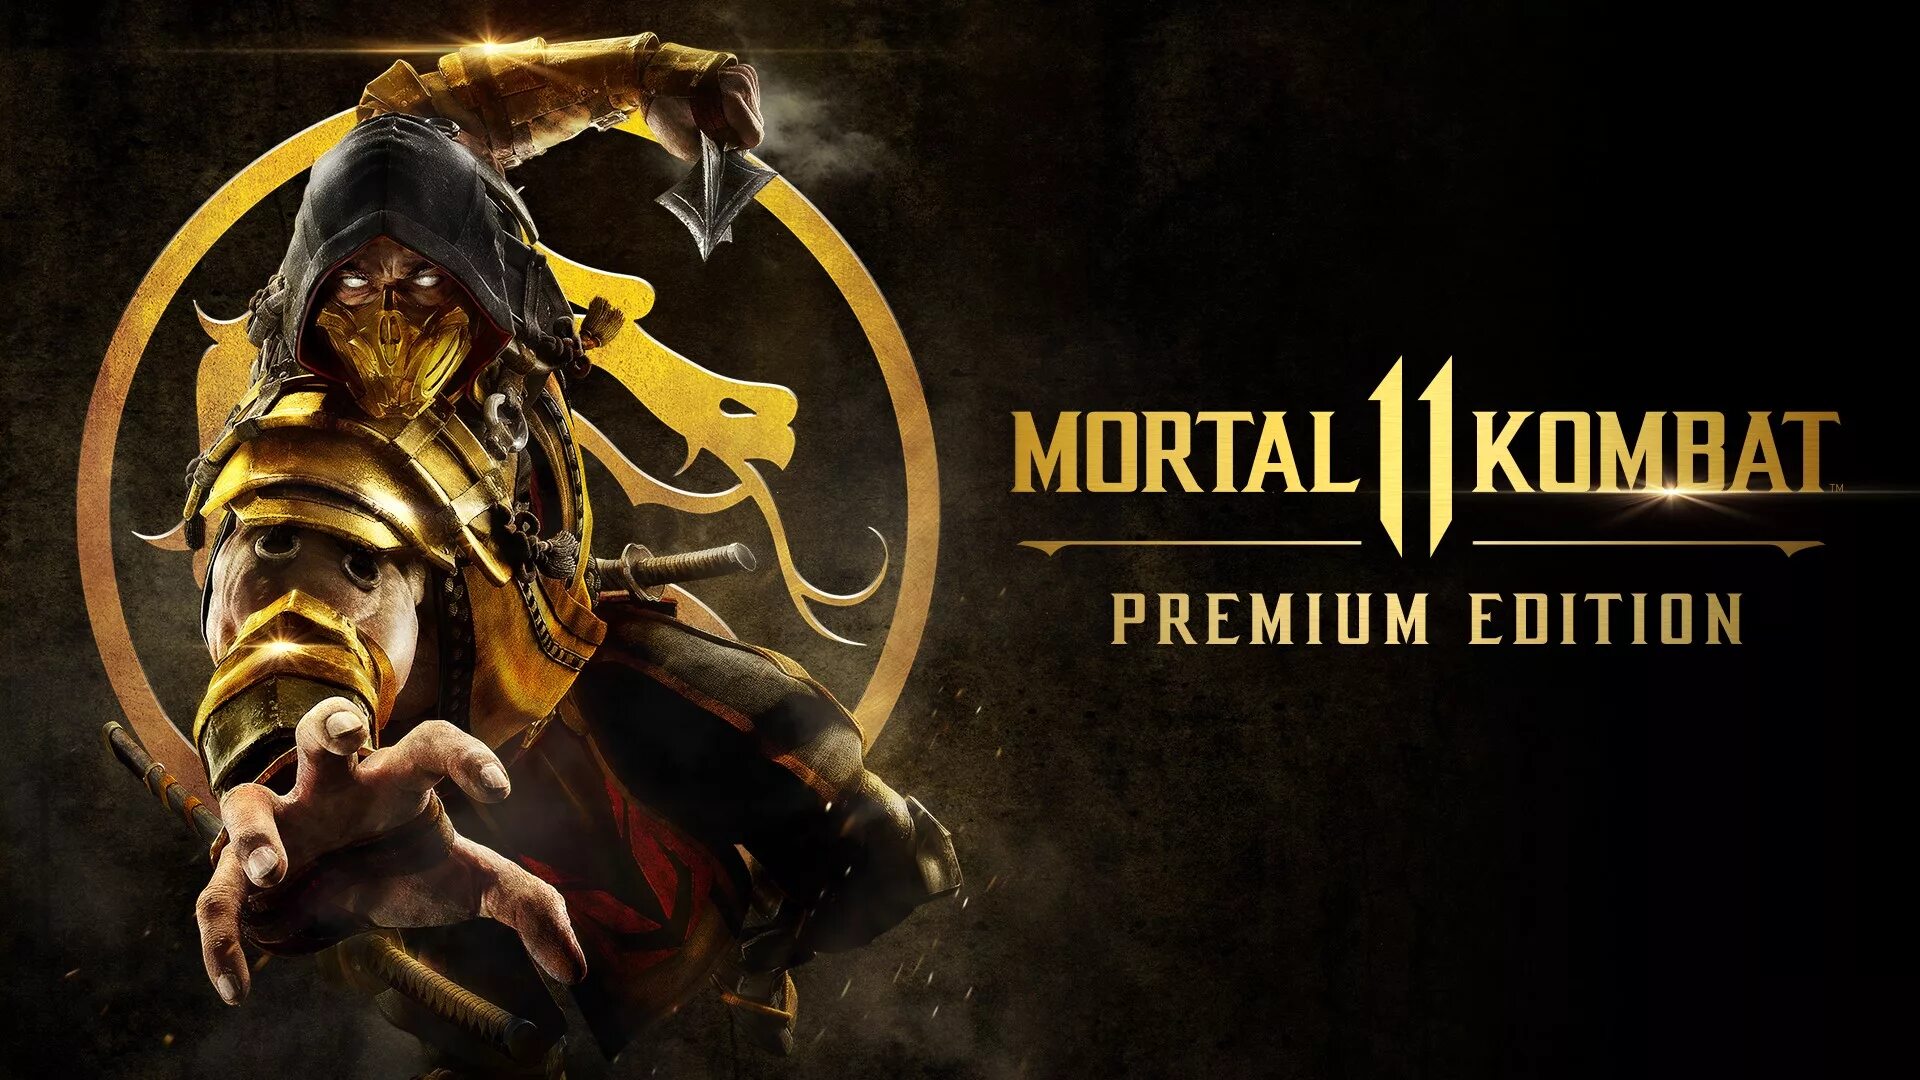 MK 11 Ultimate. Mortal Kombat 11 (ps4). Mortal Kombat 11. Premium Edition. PLAYSTATION 4 Mortal Kombat 11 обложка. Мк11 ps4